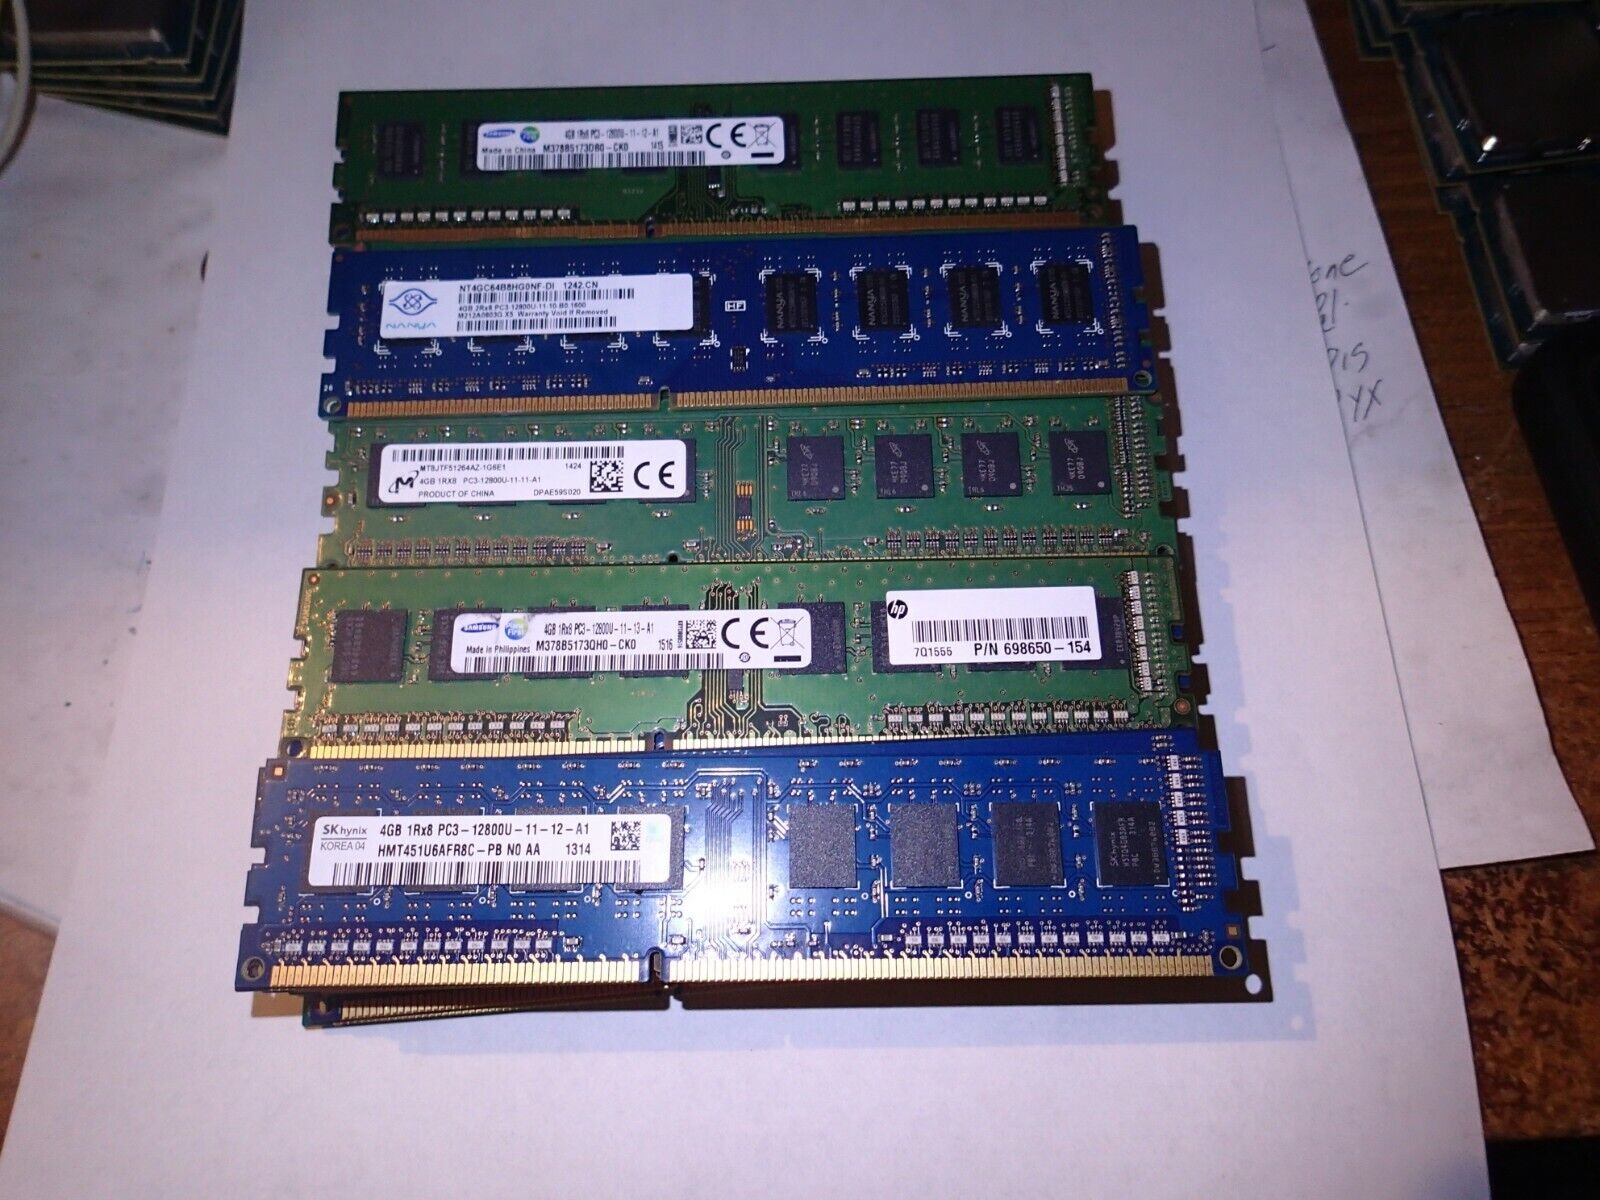 LOT of 50 4GB DDR3 PC3-12800U 1600MHz DESKTOP RAM Memory Mixed Brands